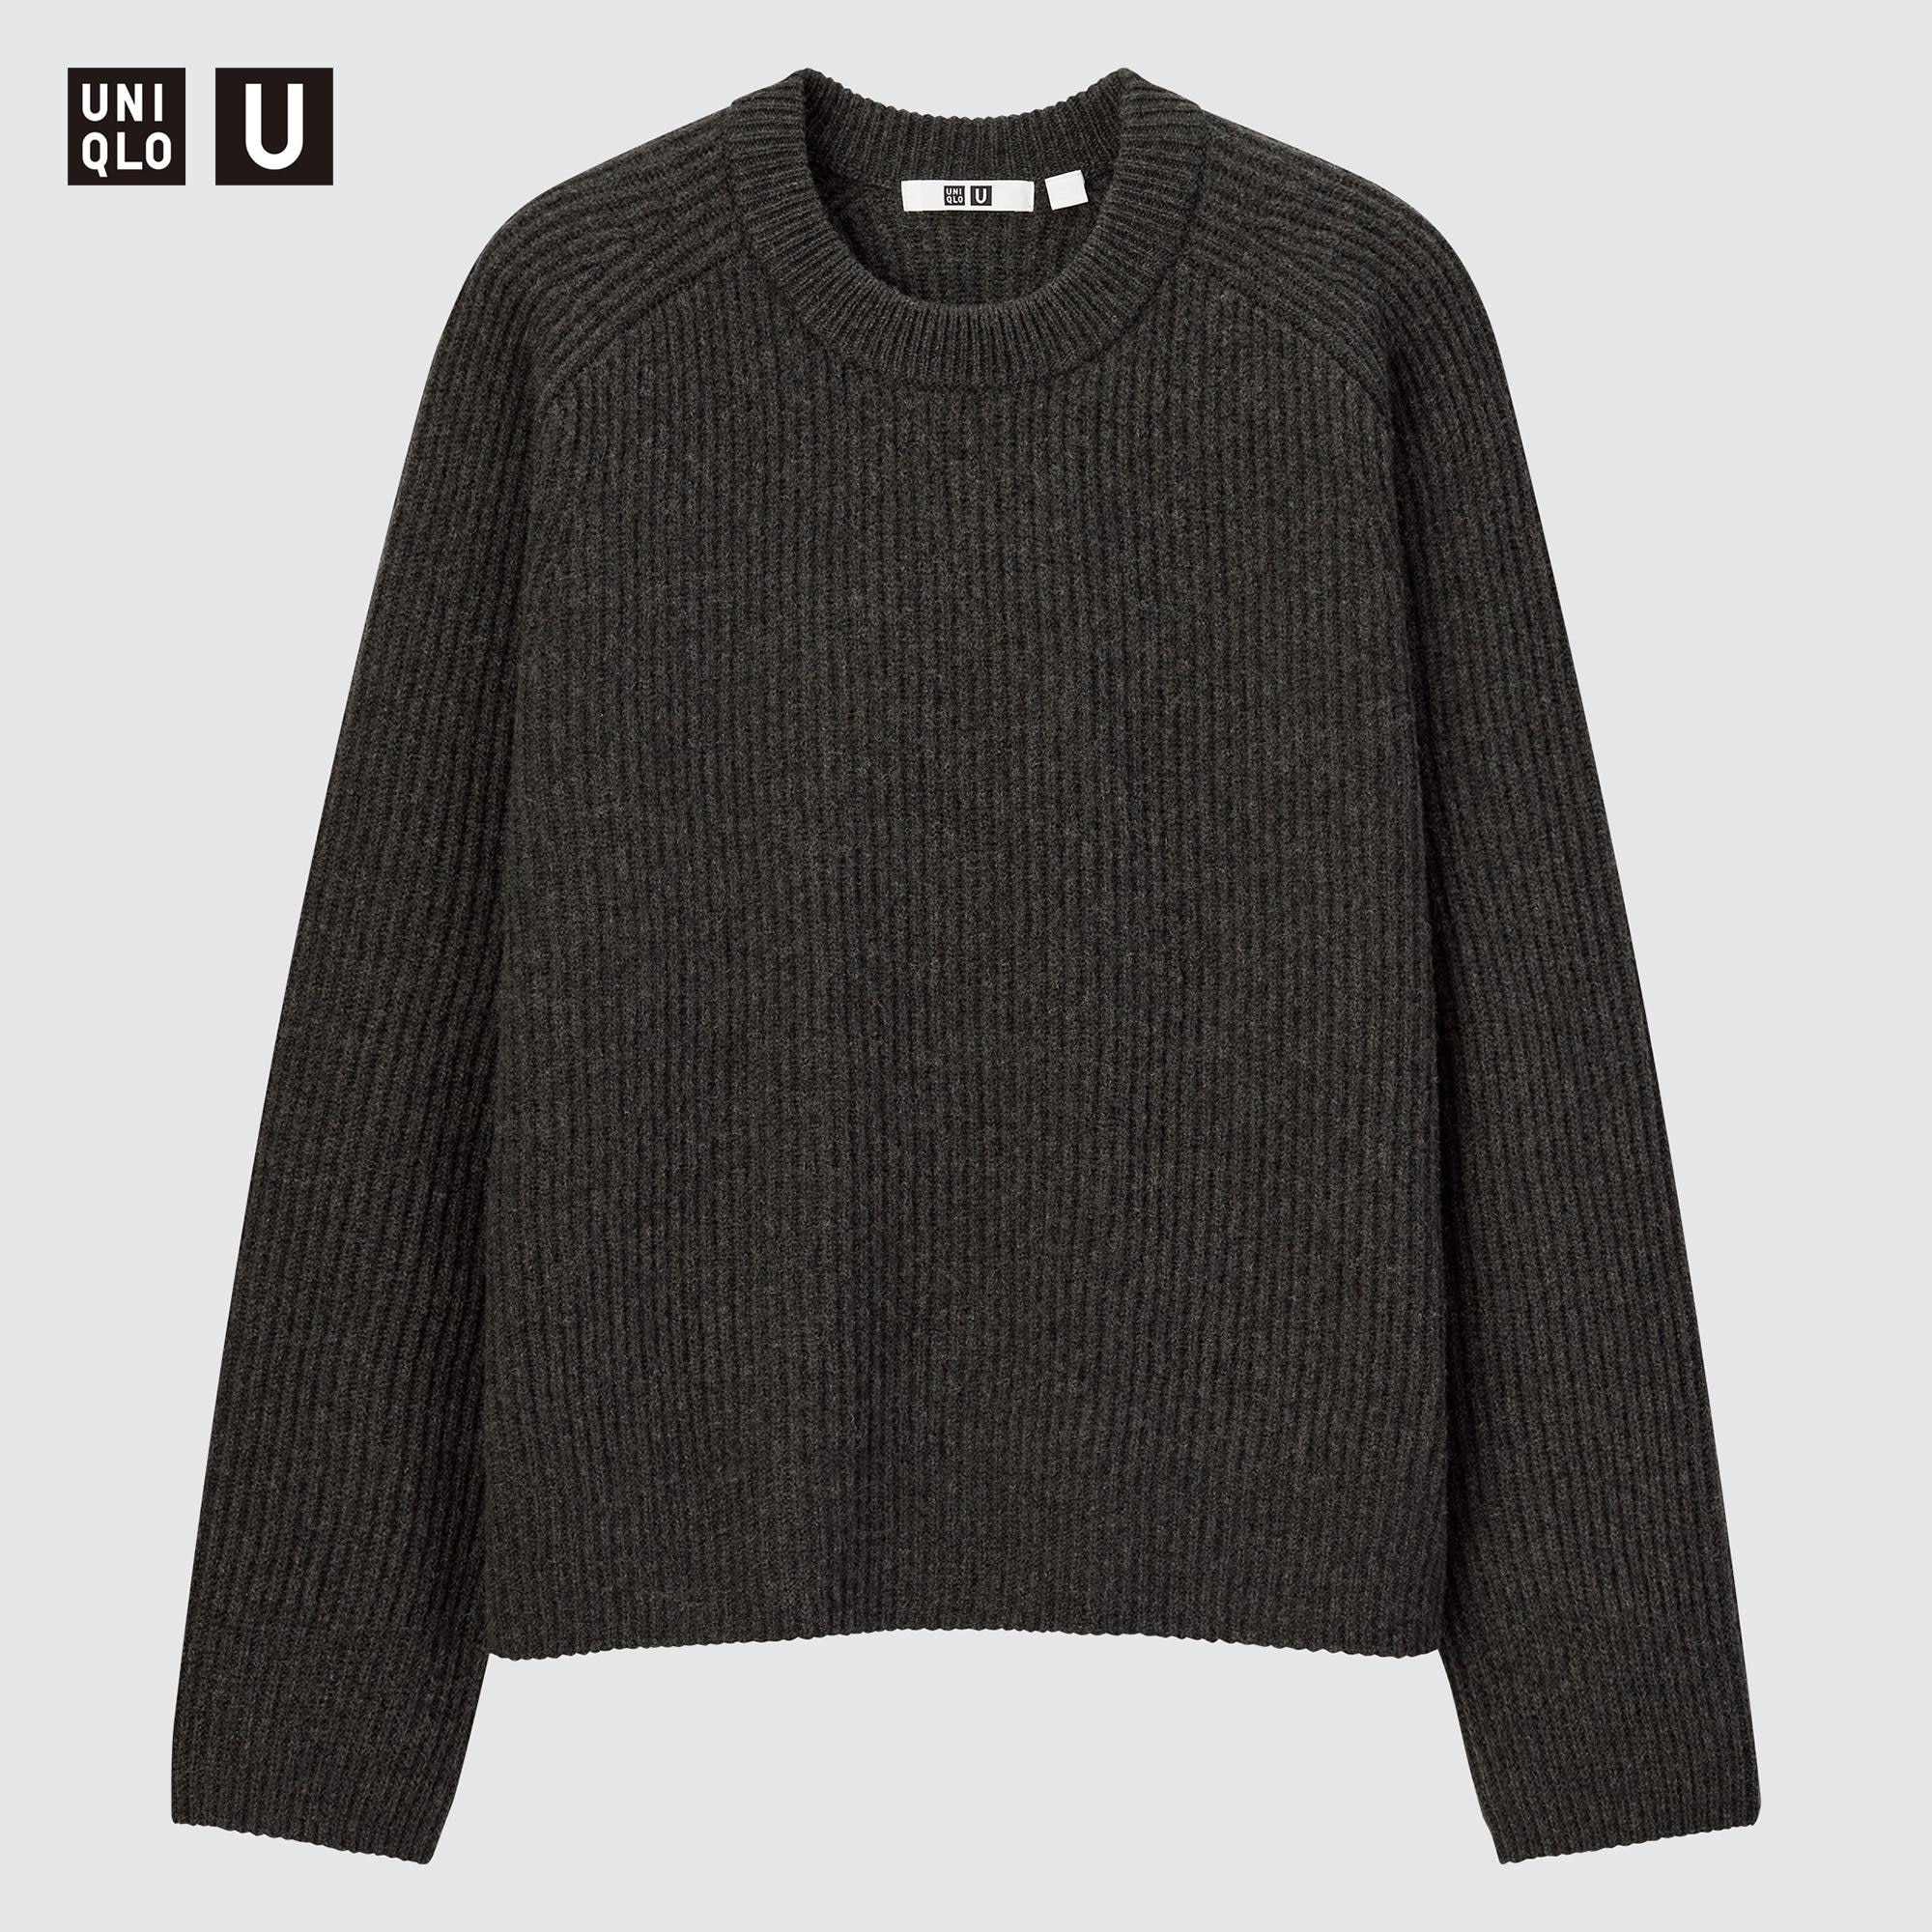 Uniqlo Premium Lambswool Wool Grey Basic Knit Sweater  Large  eBay